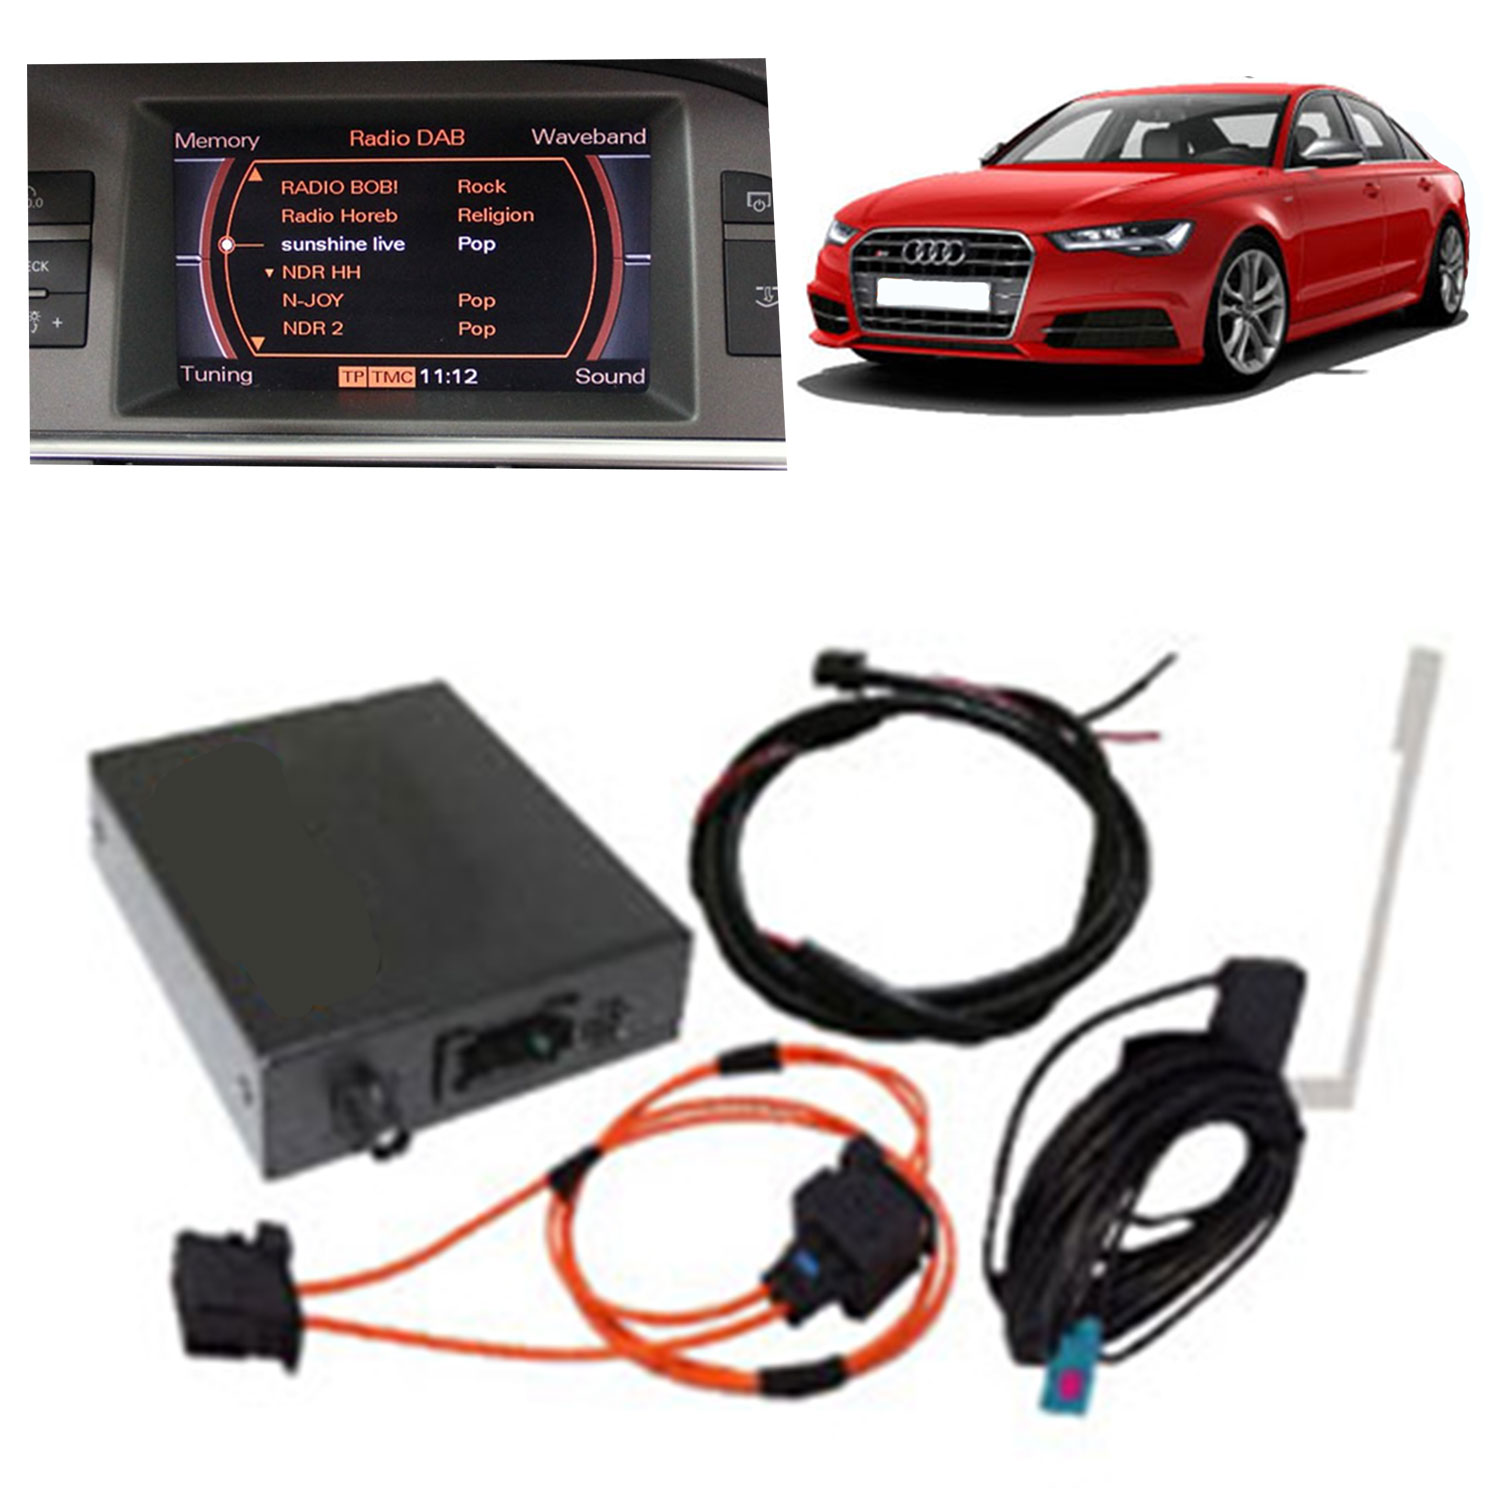 DAB+ Complete Digital Radio + Antenna Mmi 2G for Audi A4 B8 A5 8T A6 4F Q7